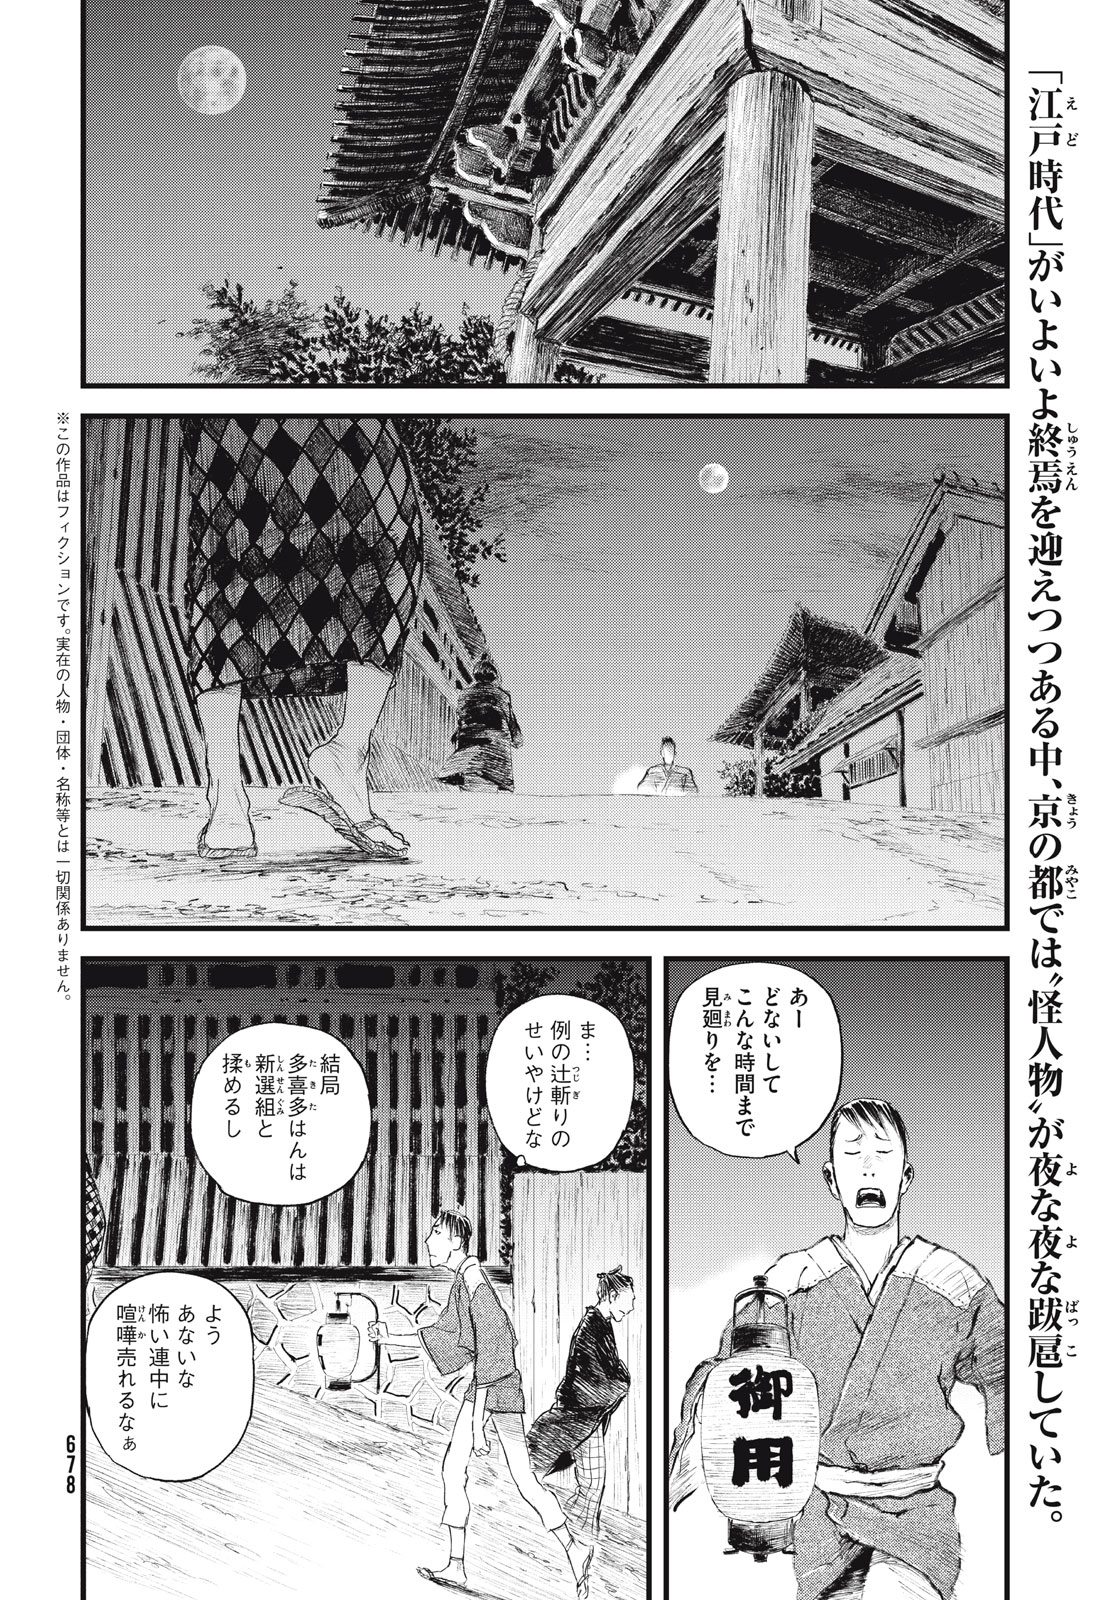 Blade of the Immortal: Bakumatsu Arc - Chapter 52 - Page 2